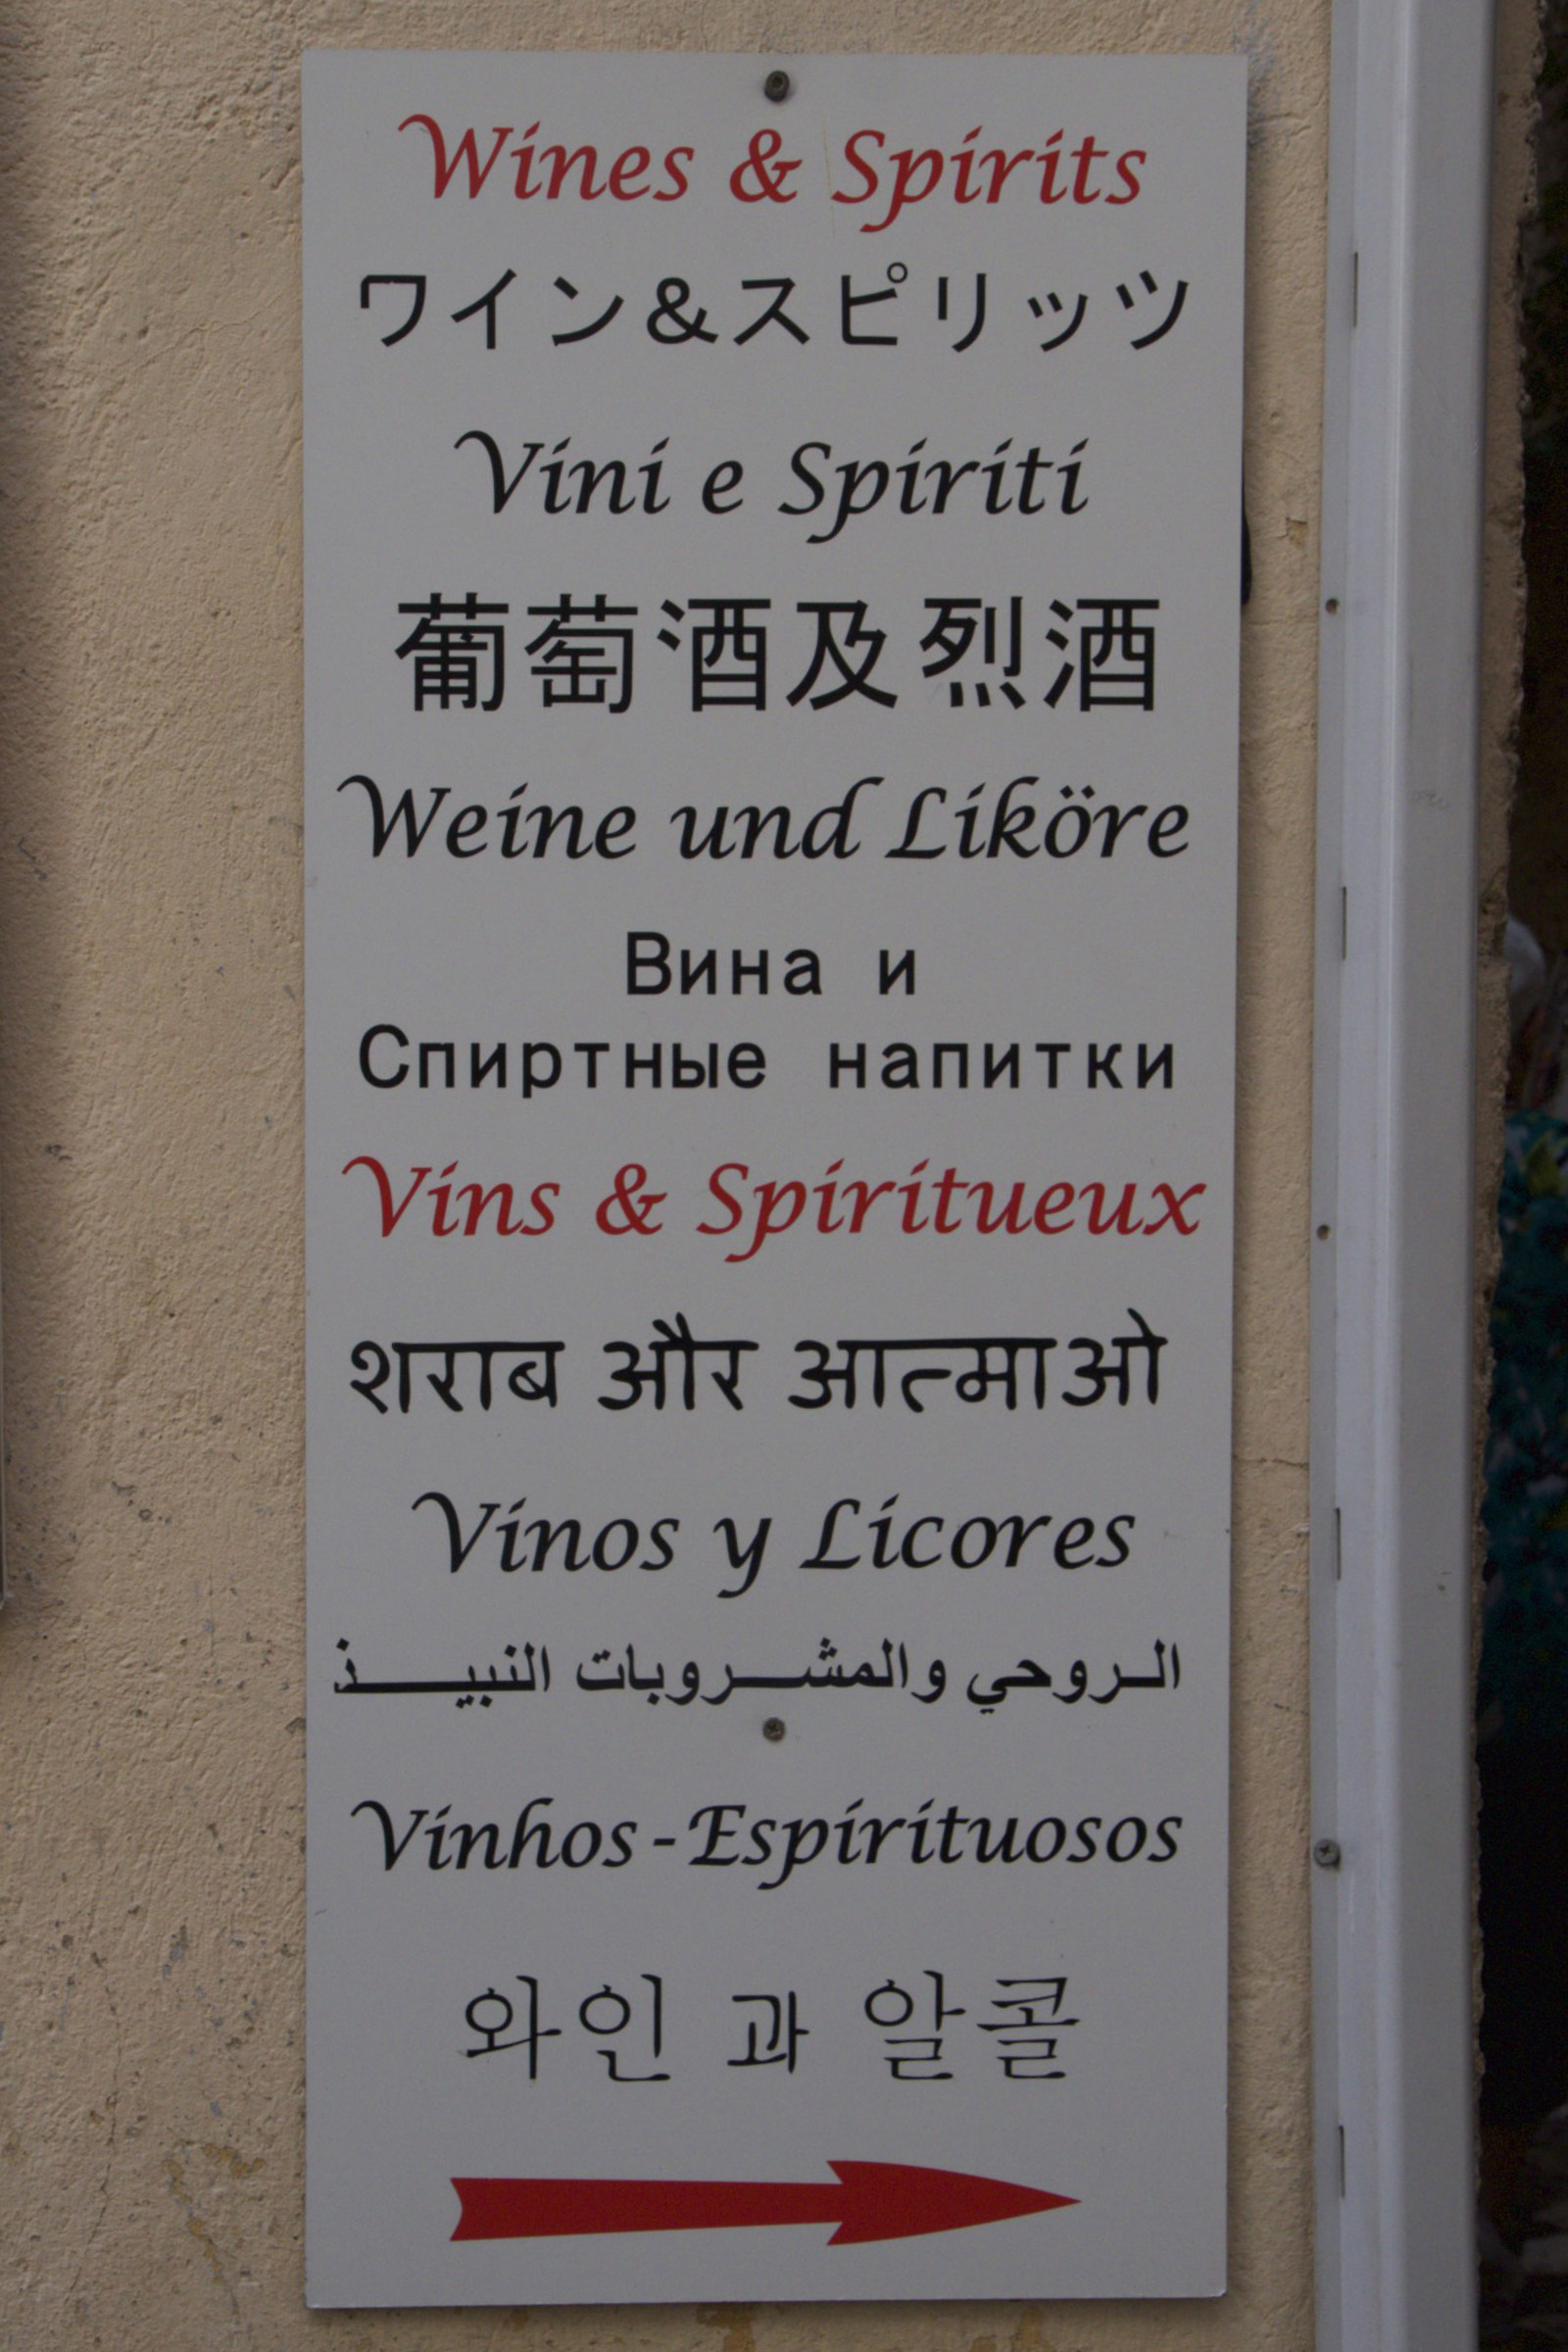 Direzione "Spirituale" o "di-Vina"...